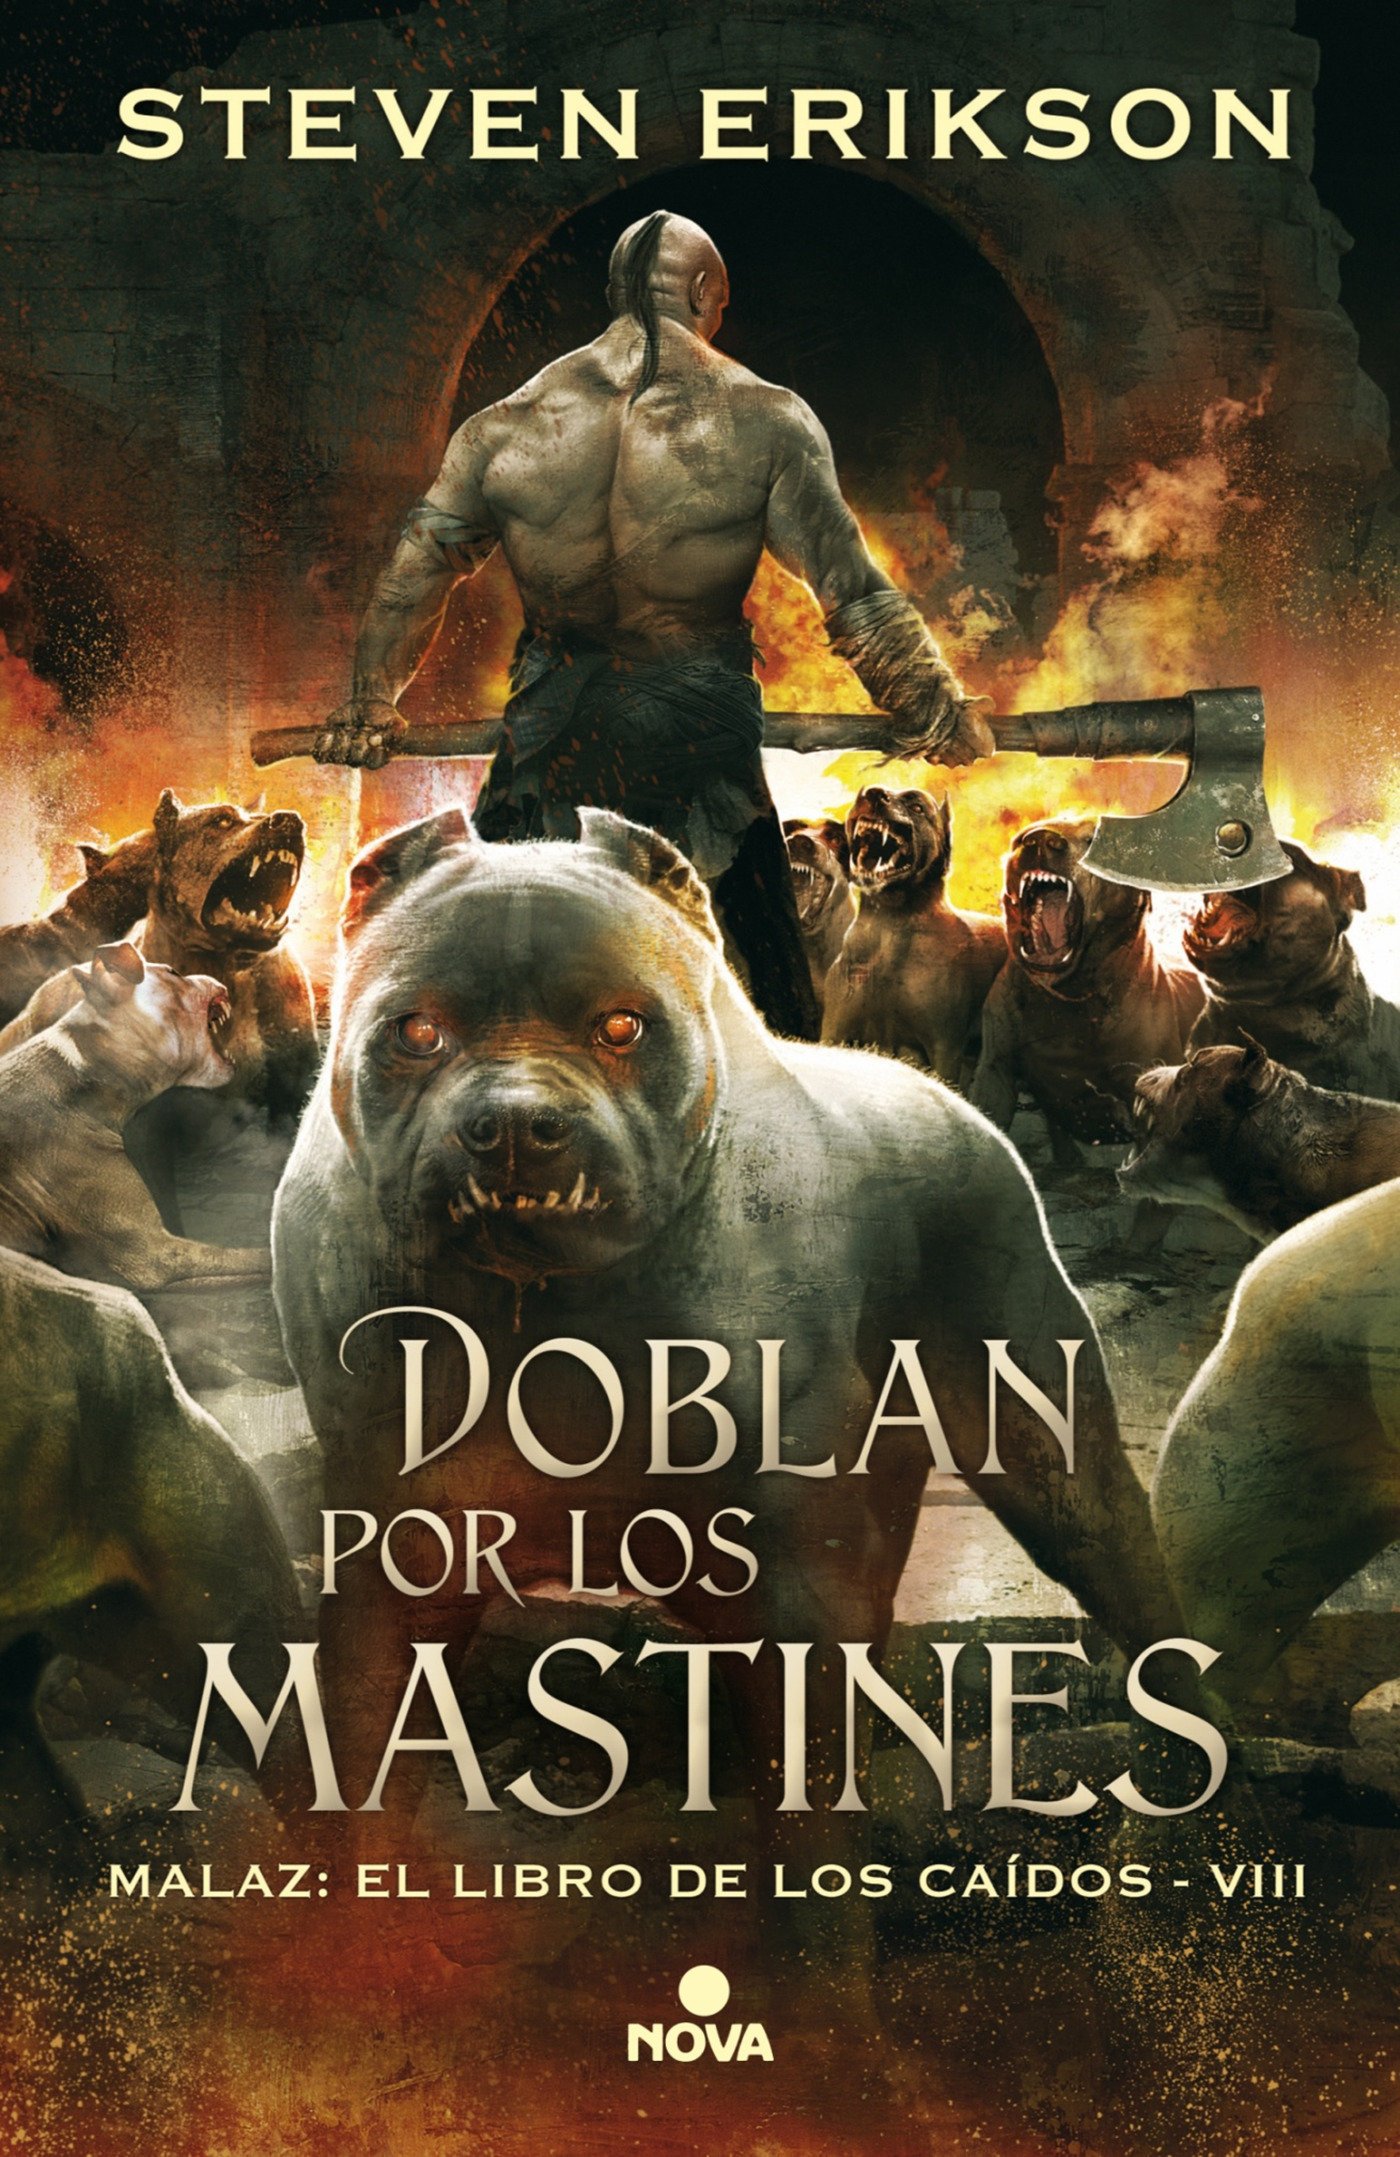 Steven Erikson: Doblan Por los Mastines (Spanish language, 2017, Ediciones B)